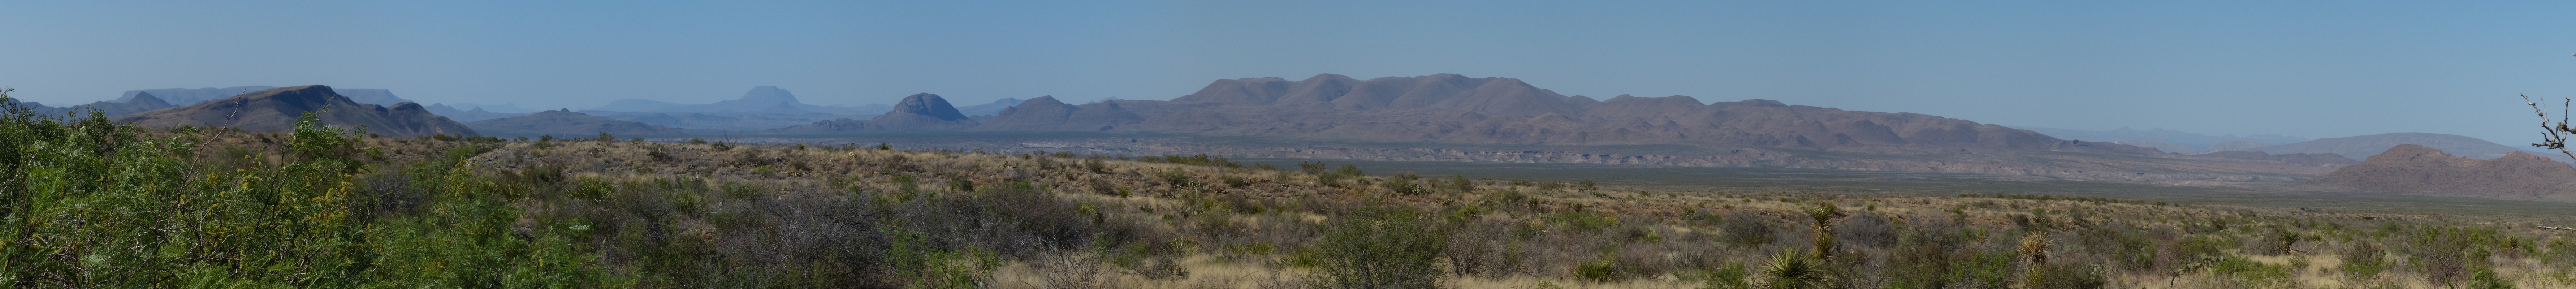 P1010020_desert_basin_panoramic_180.jpg